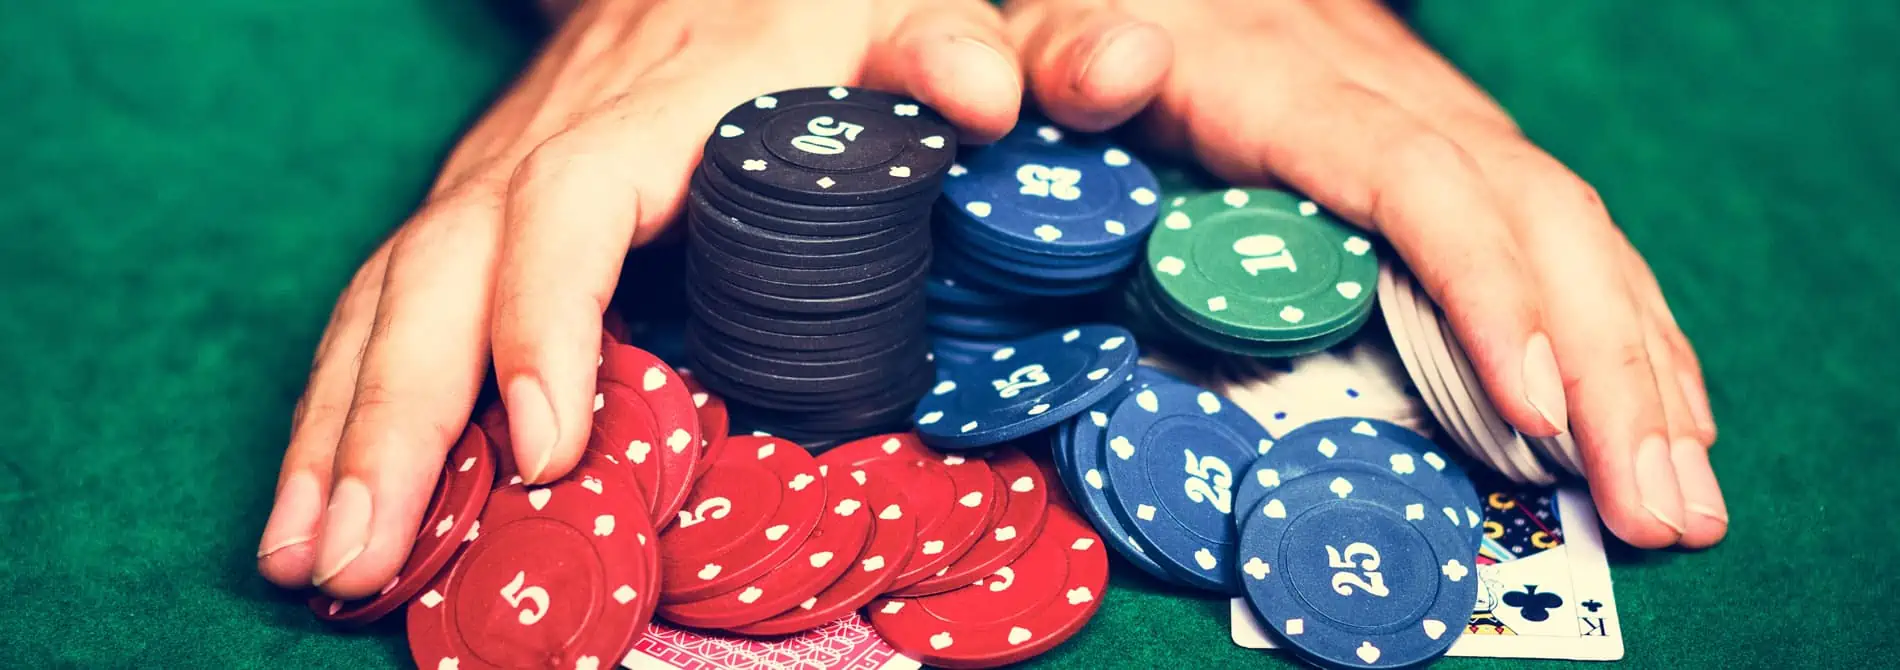 Hands holding poker chips.